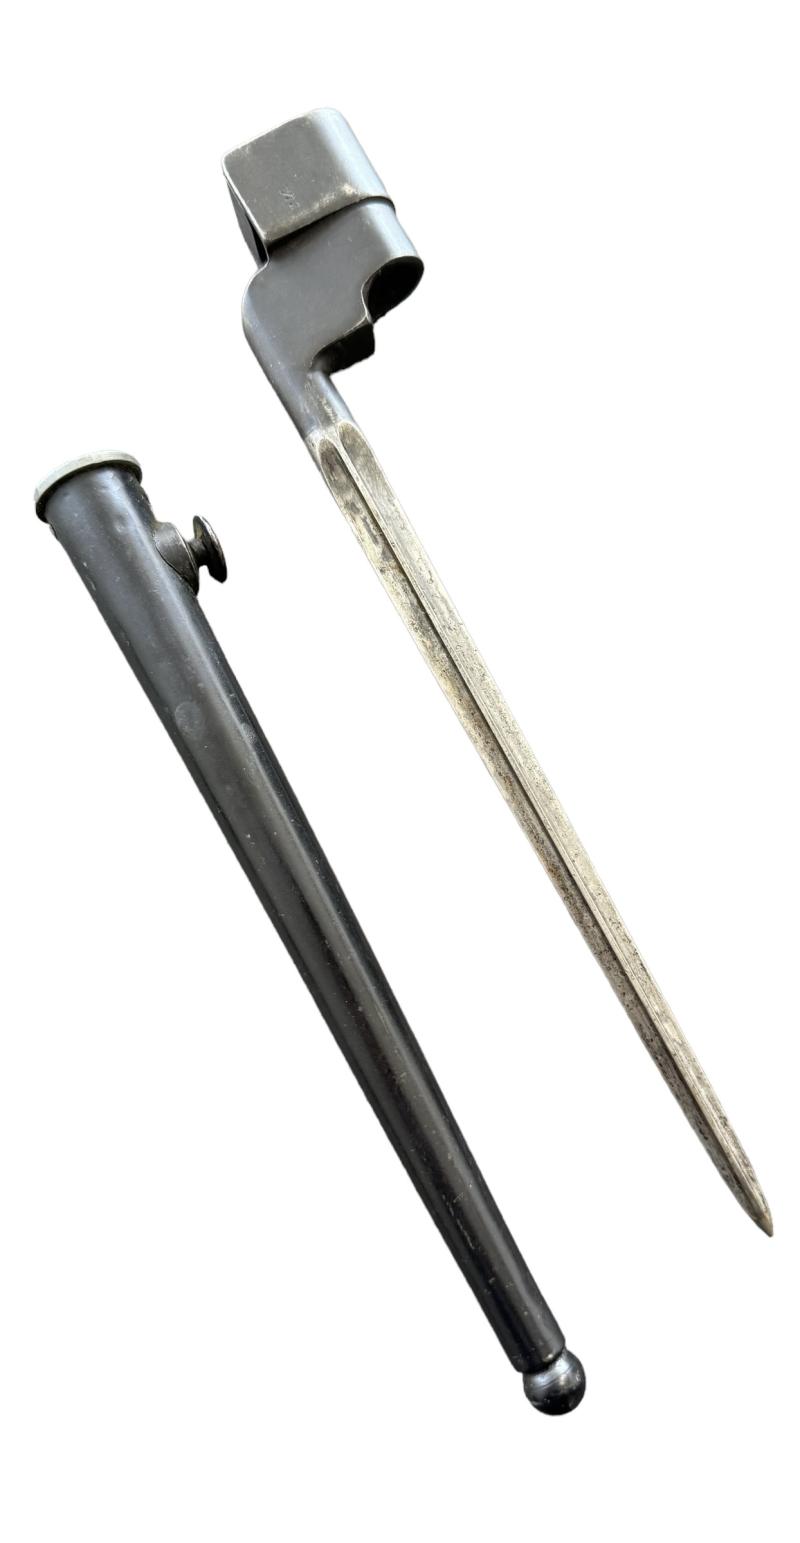 British MK1 i.e. Cruciform Lee Enfield Bayonet - Nice Used Condition